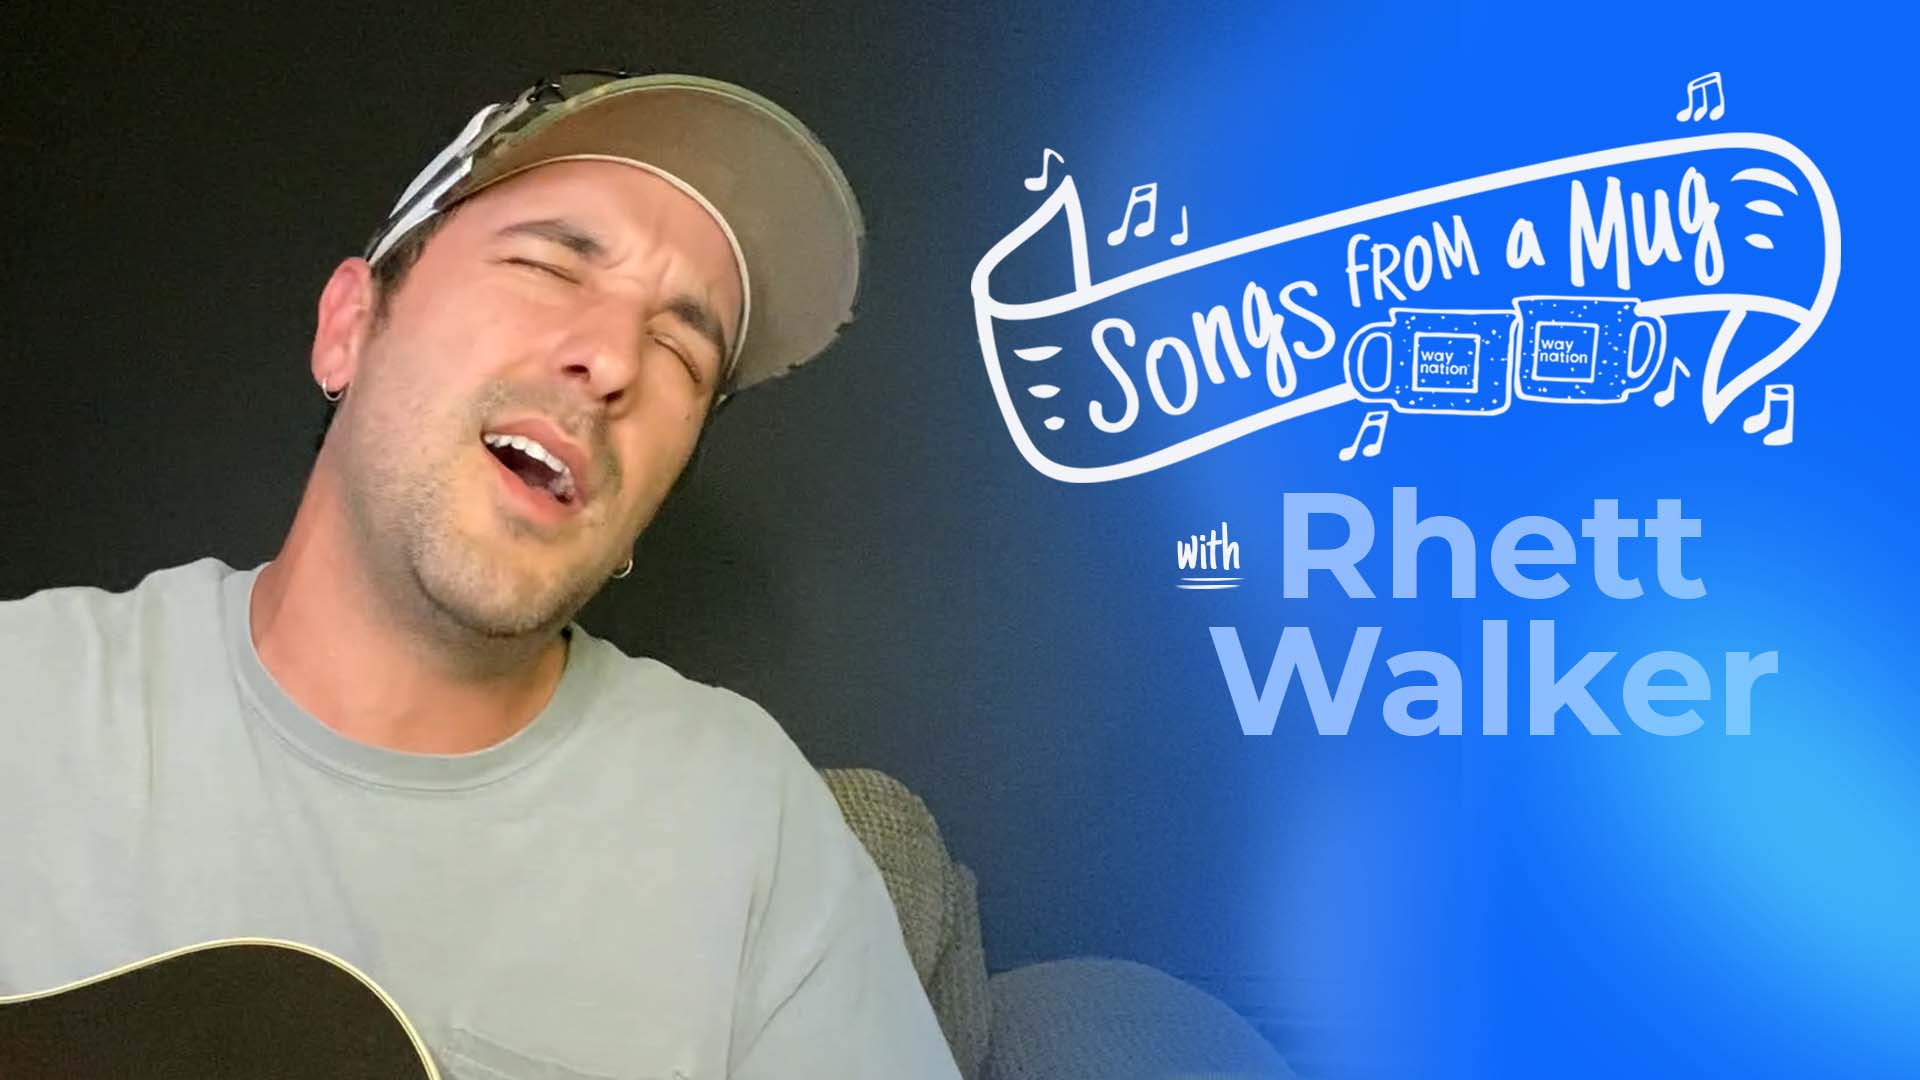 Rhett Walker Songs From a Mug